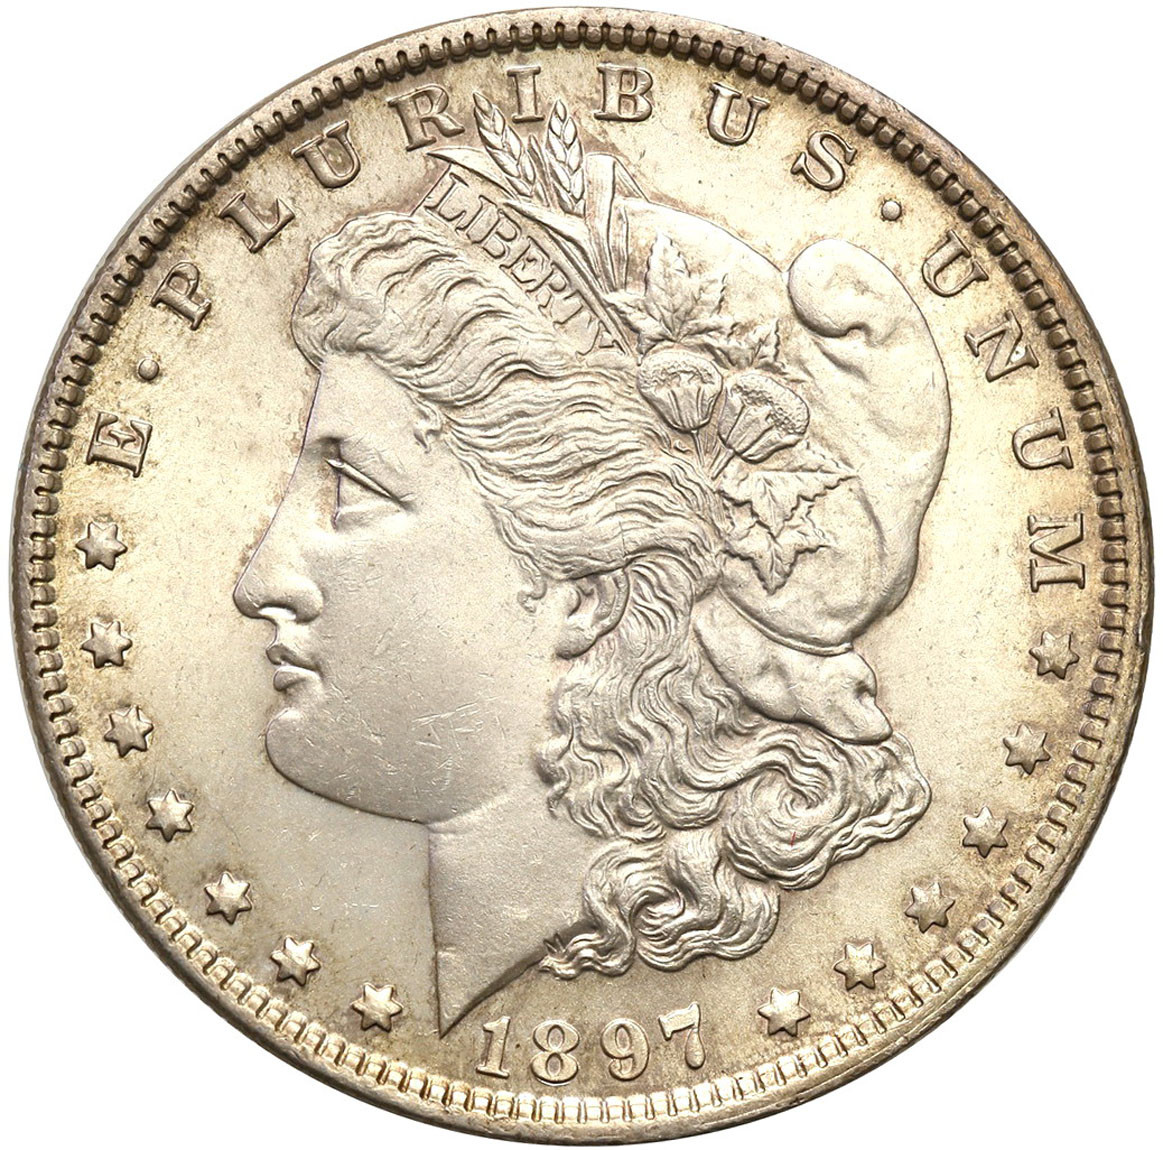 USA. 1 dolar 1897, Philadelphia